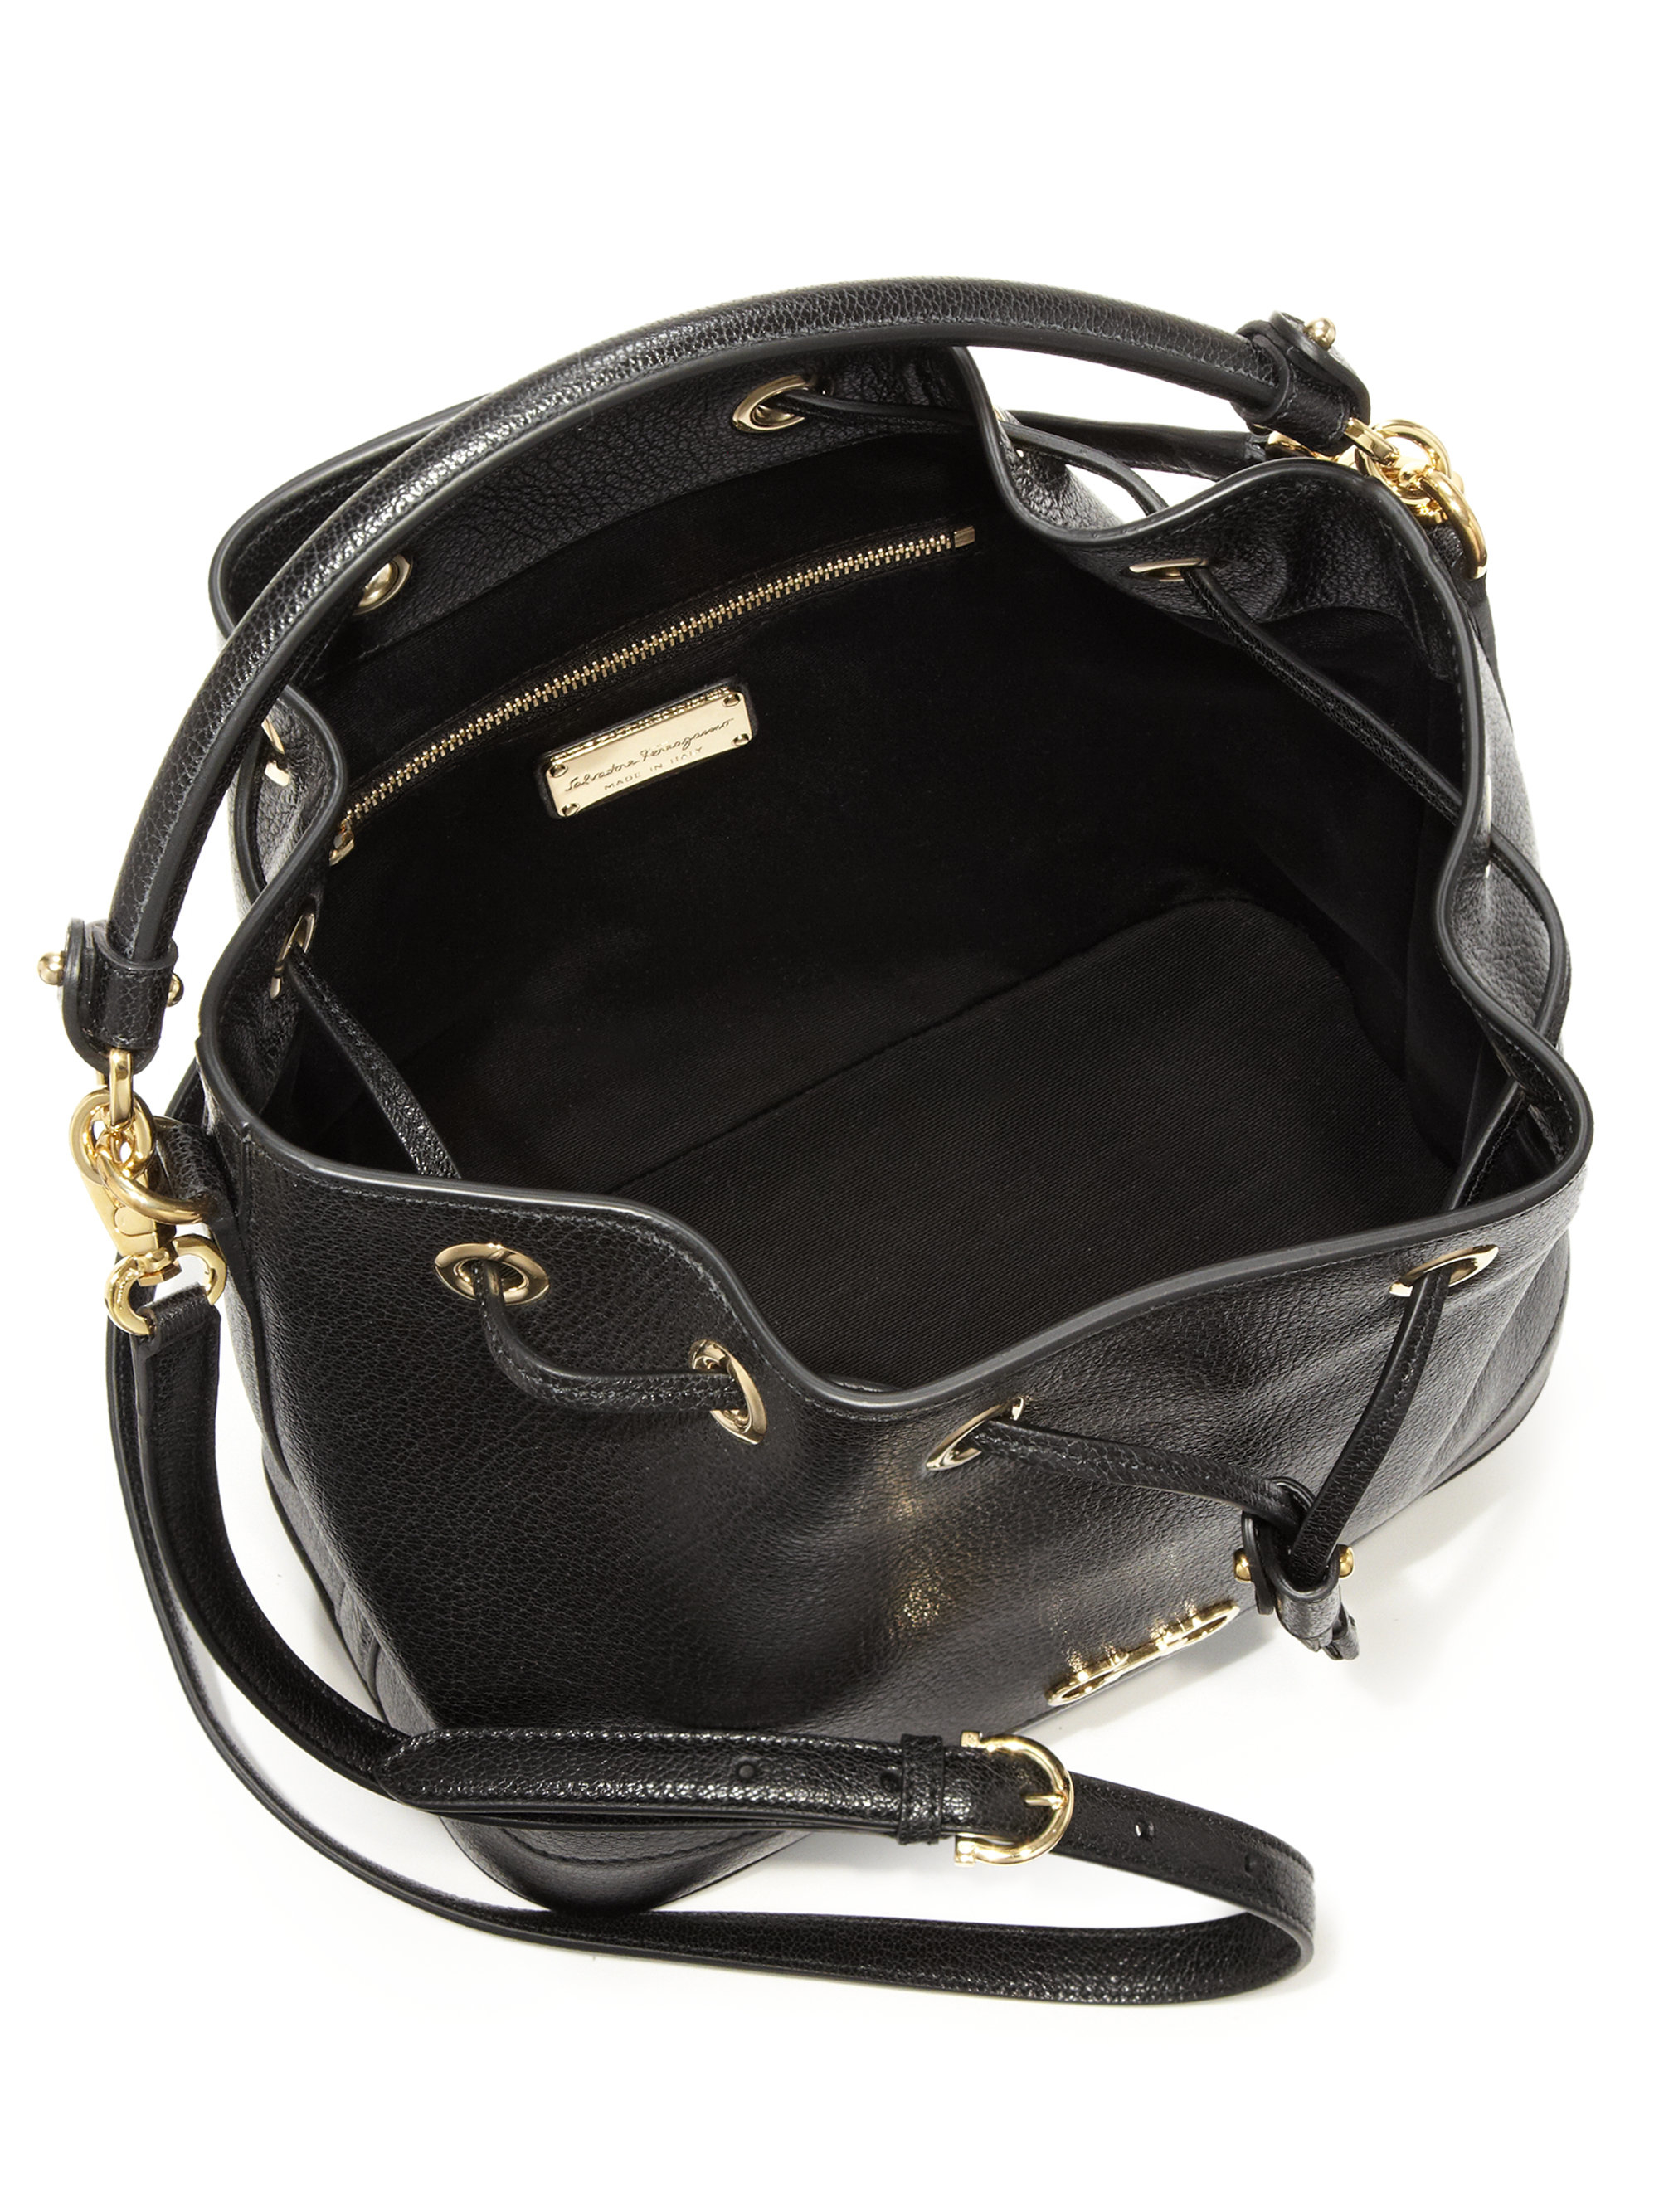 Lyst - Ferragamo Millie Leather Bucket Bag in Black